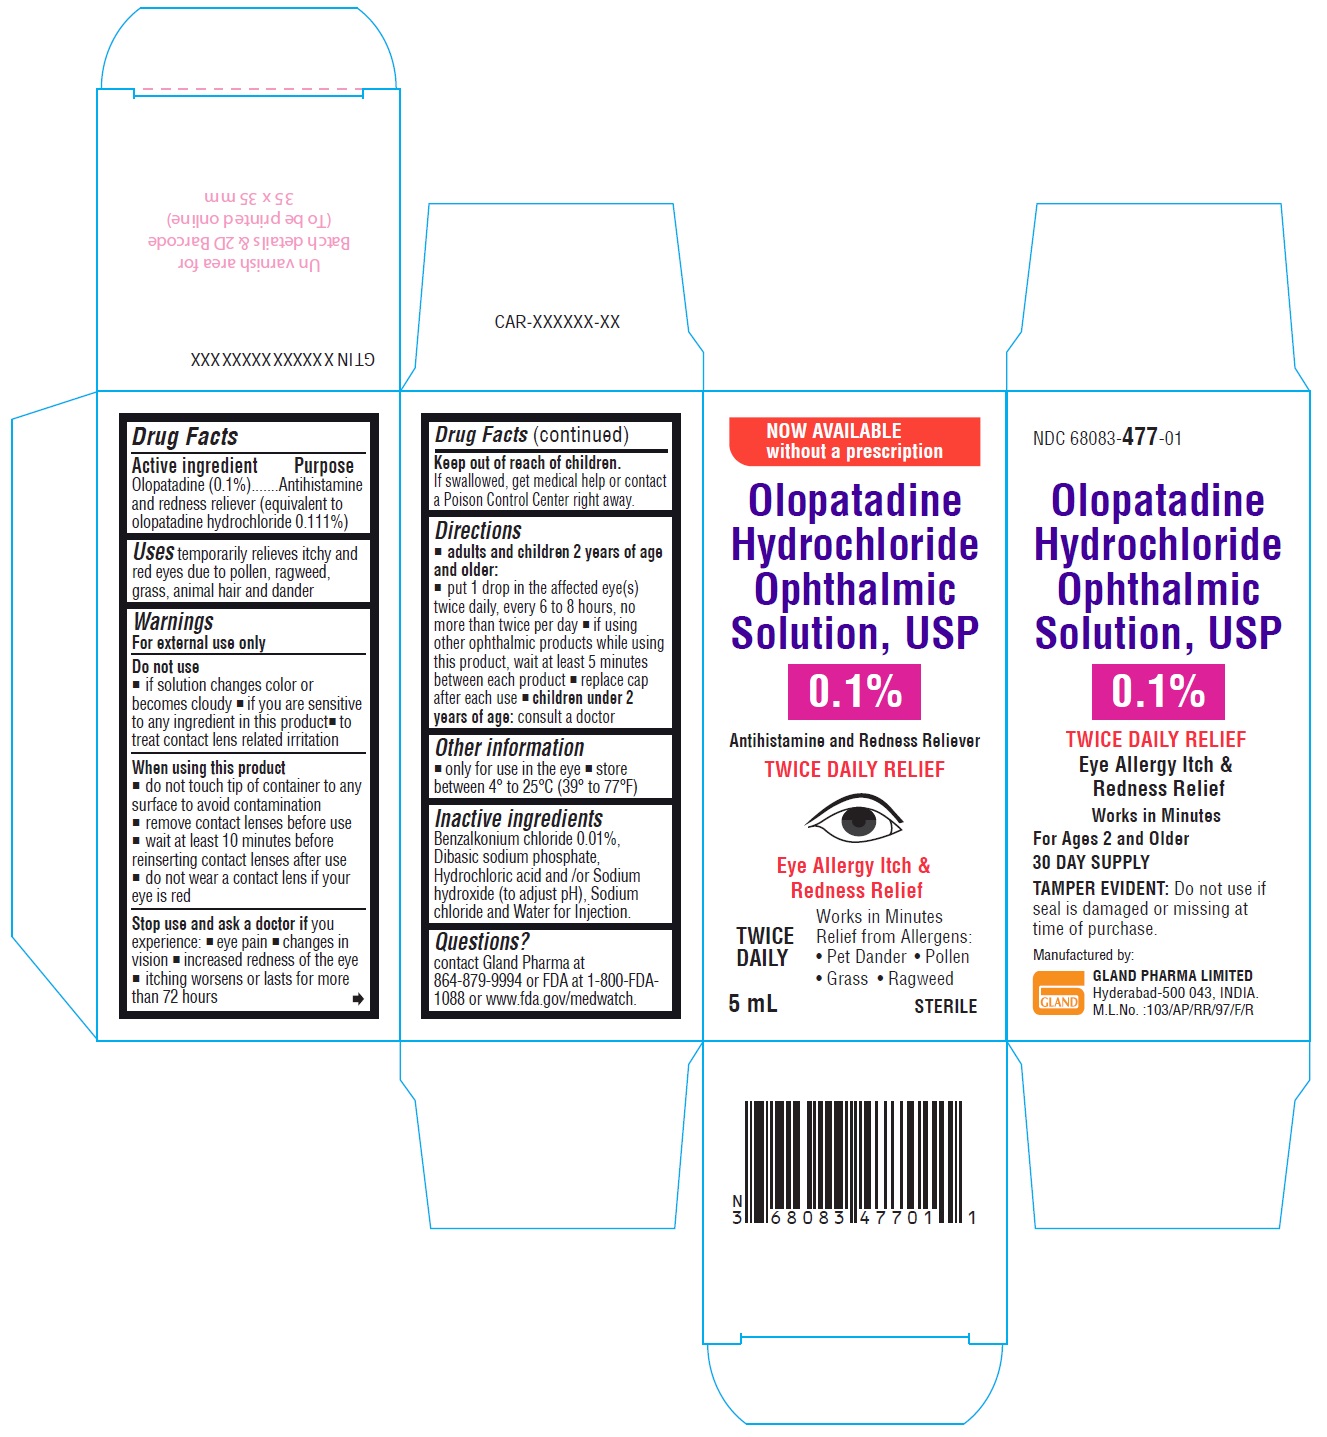 olopatadine-carton-label